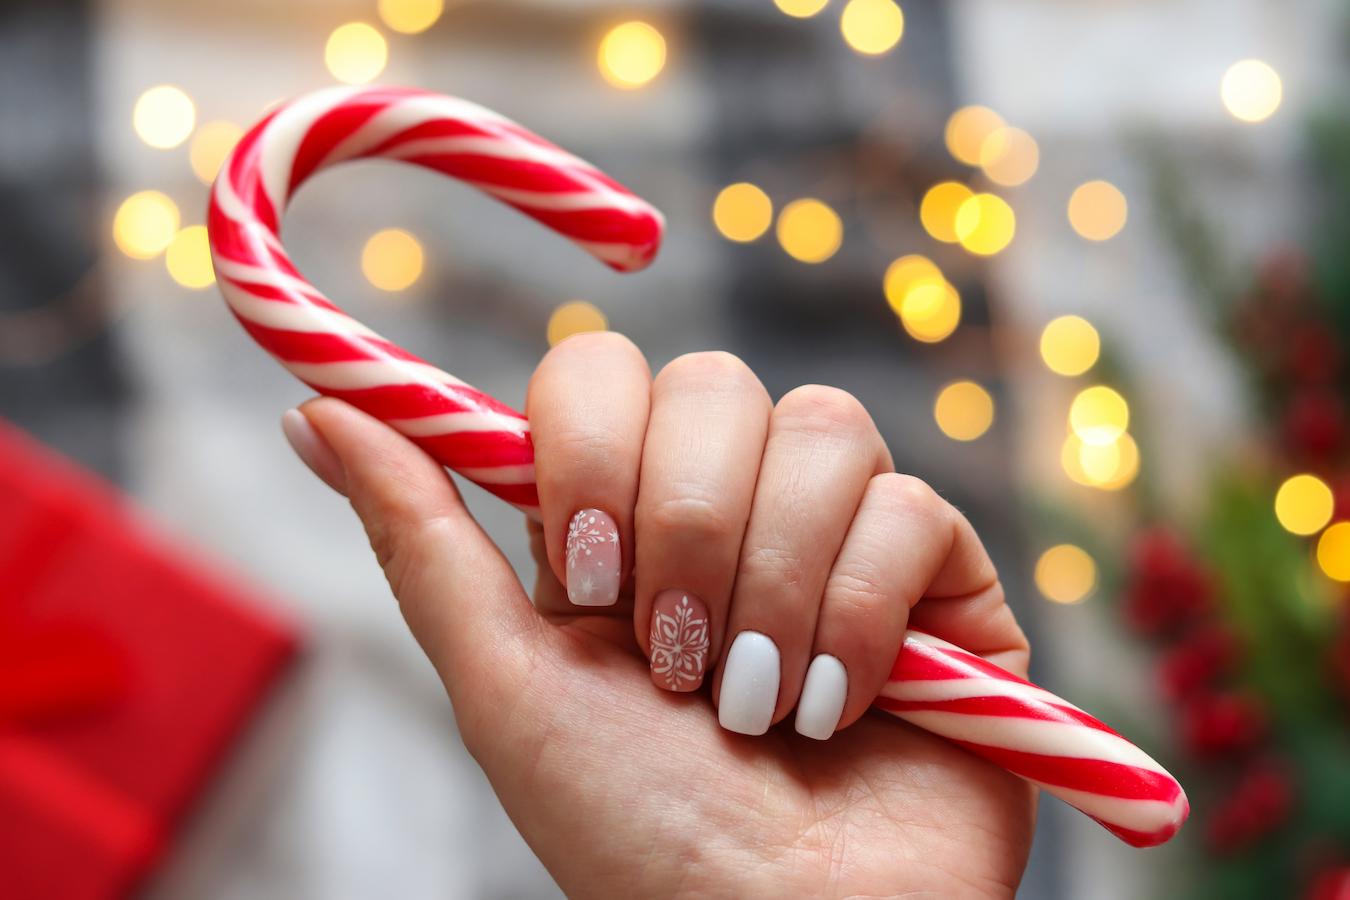 Red and White Christmas Nails Winter Nails Holiday Nails Press on Nails  Snowflakes Candy Cane Nails Set of 10 